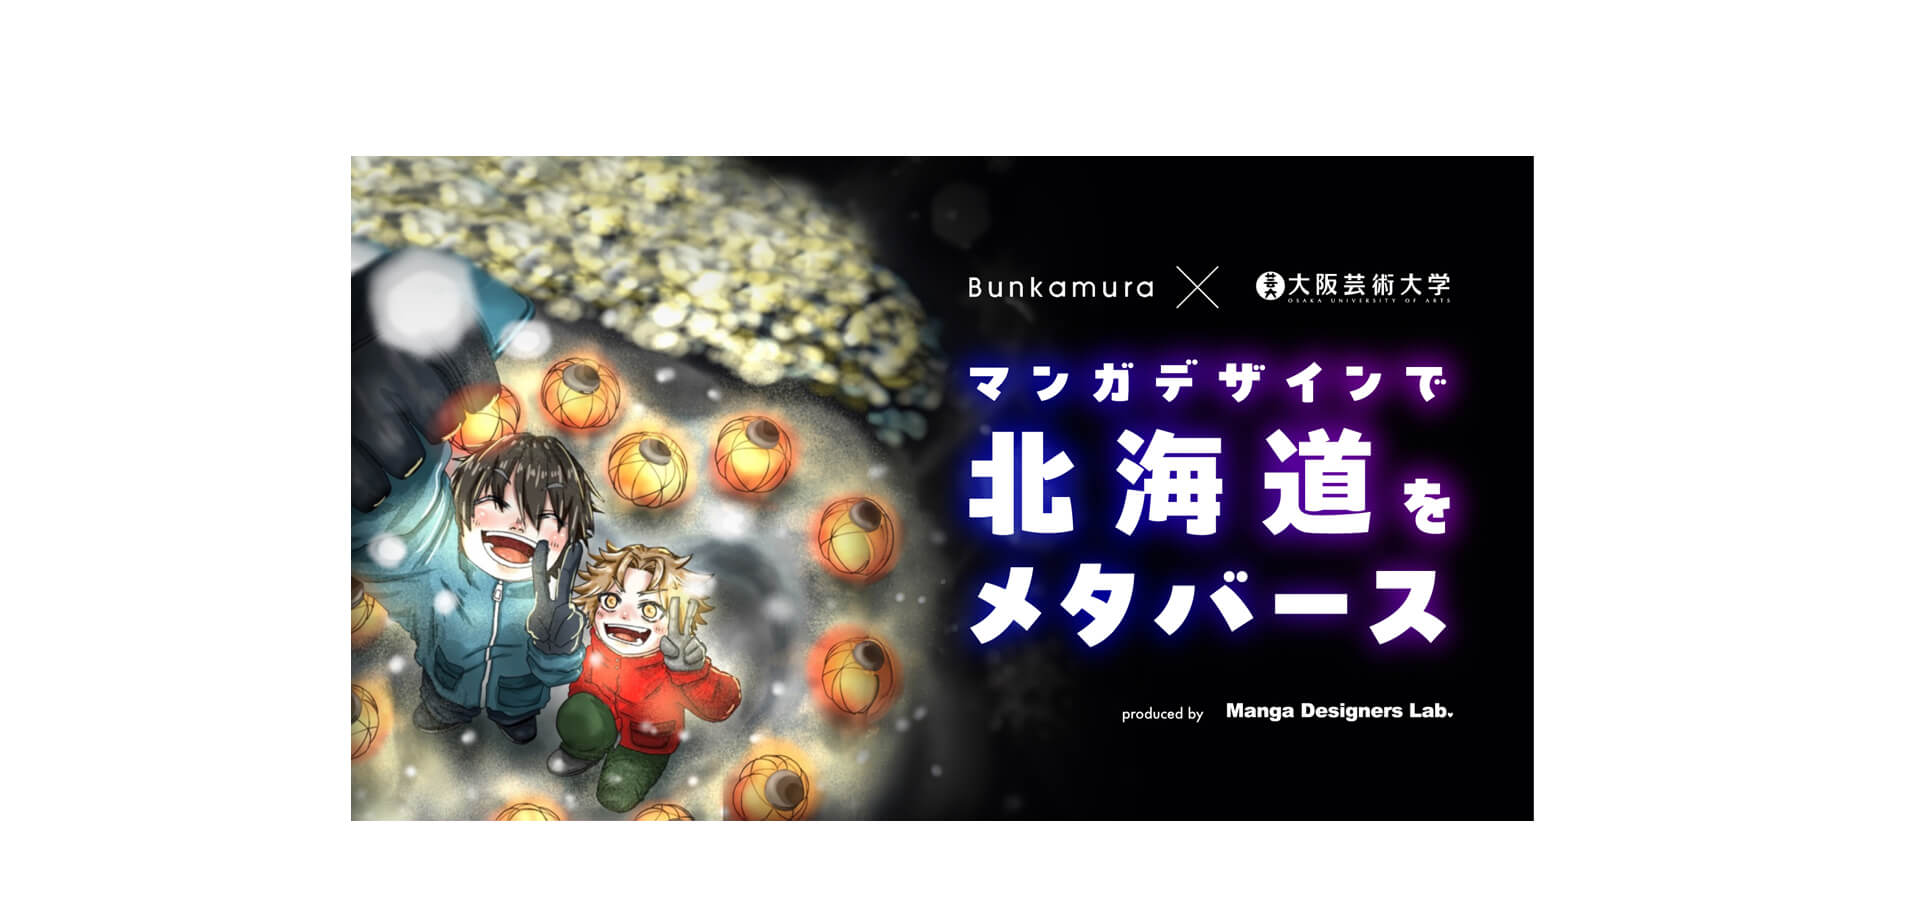 Bunkamura×大阪芸術大学　産学共創企画　Bunkamuraメタバース「マンガデザインで北海道をメタバース」展 バナー